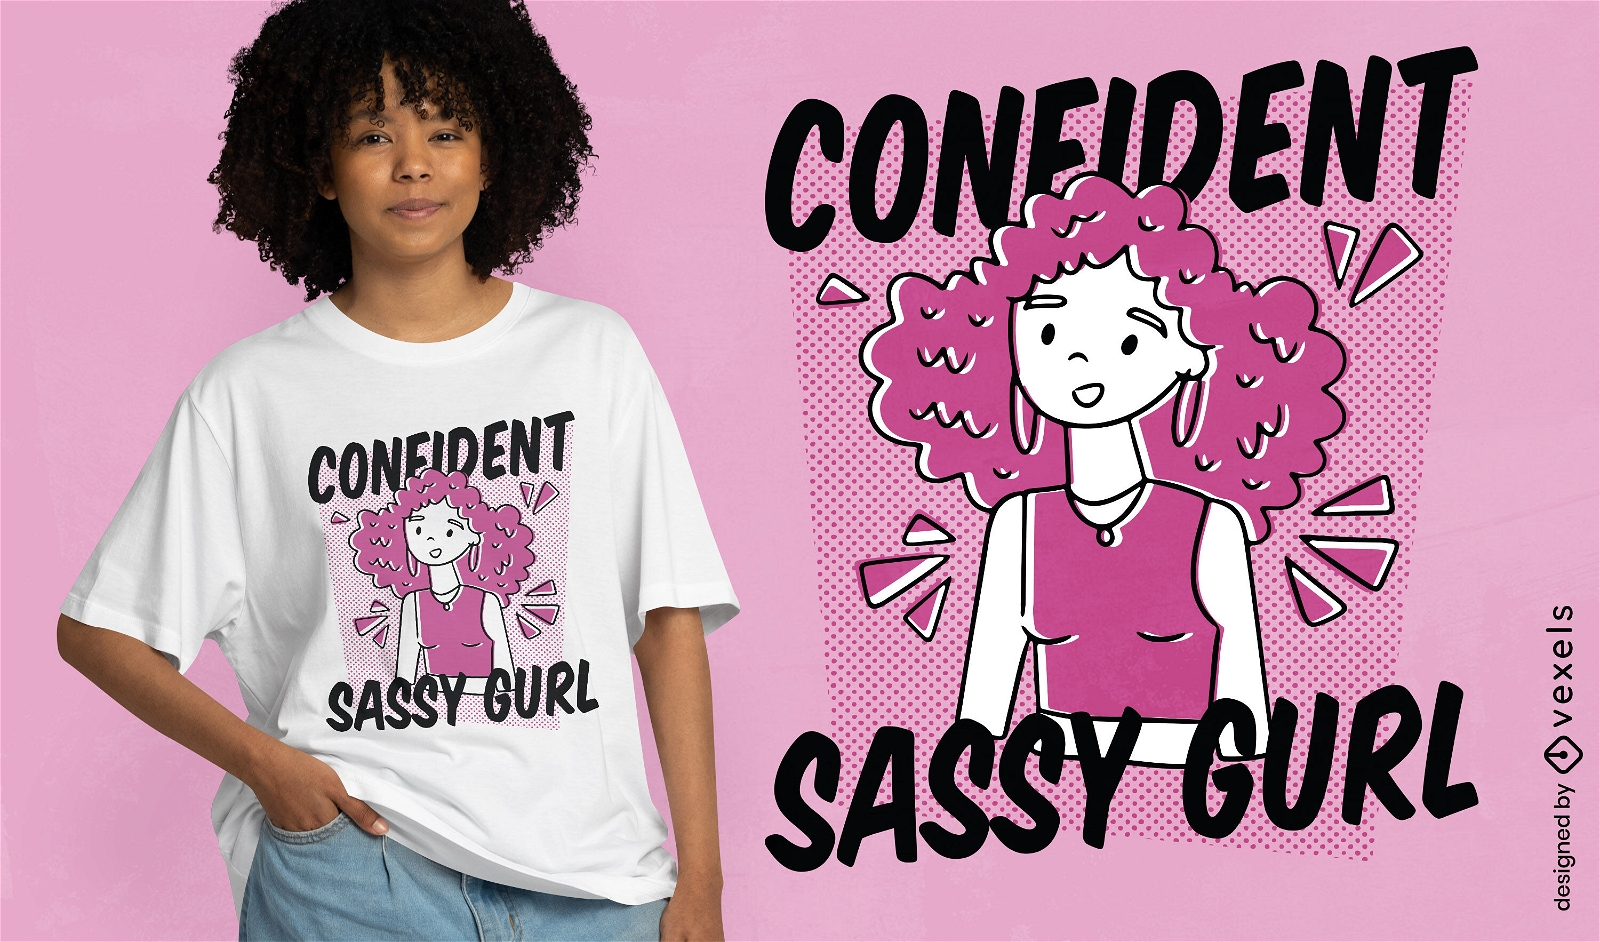 Rosa Cartoon-T-Shirt-Design für selbstbewusstes Mädchen